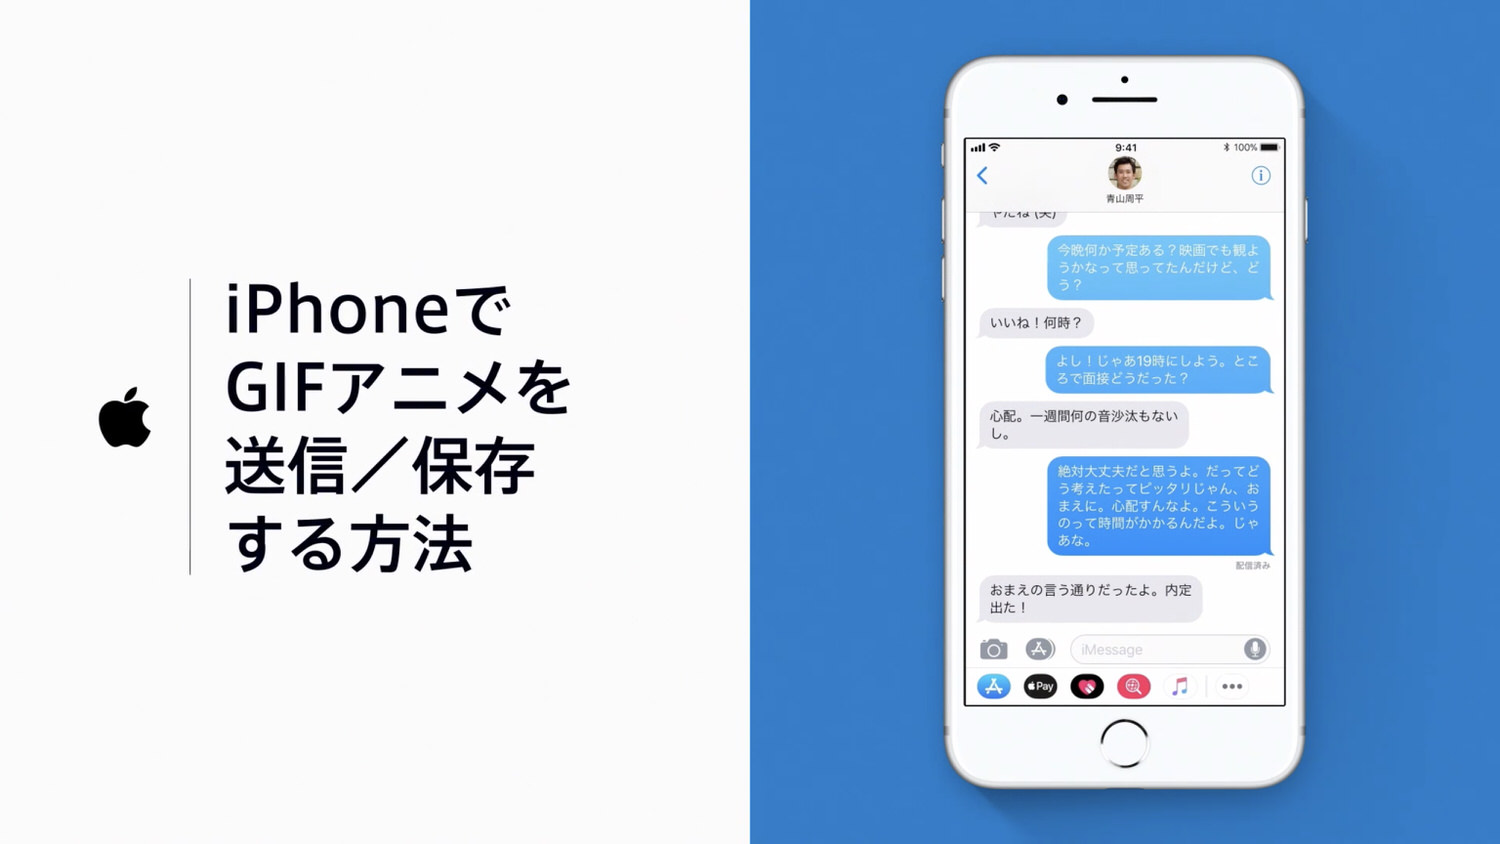 Iphoneでgifアニメを送信 保存する方法 Appleが動画でわかりやすく解説 Corriente Top